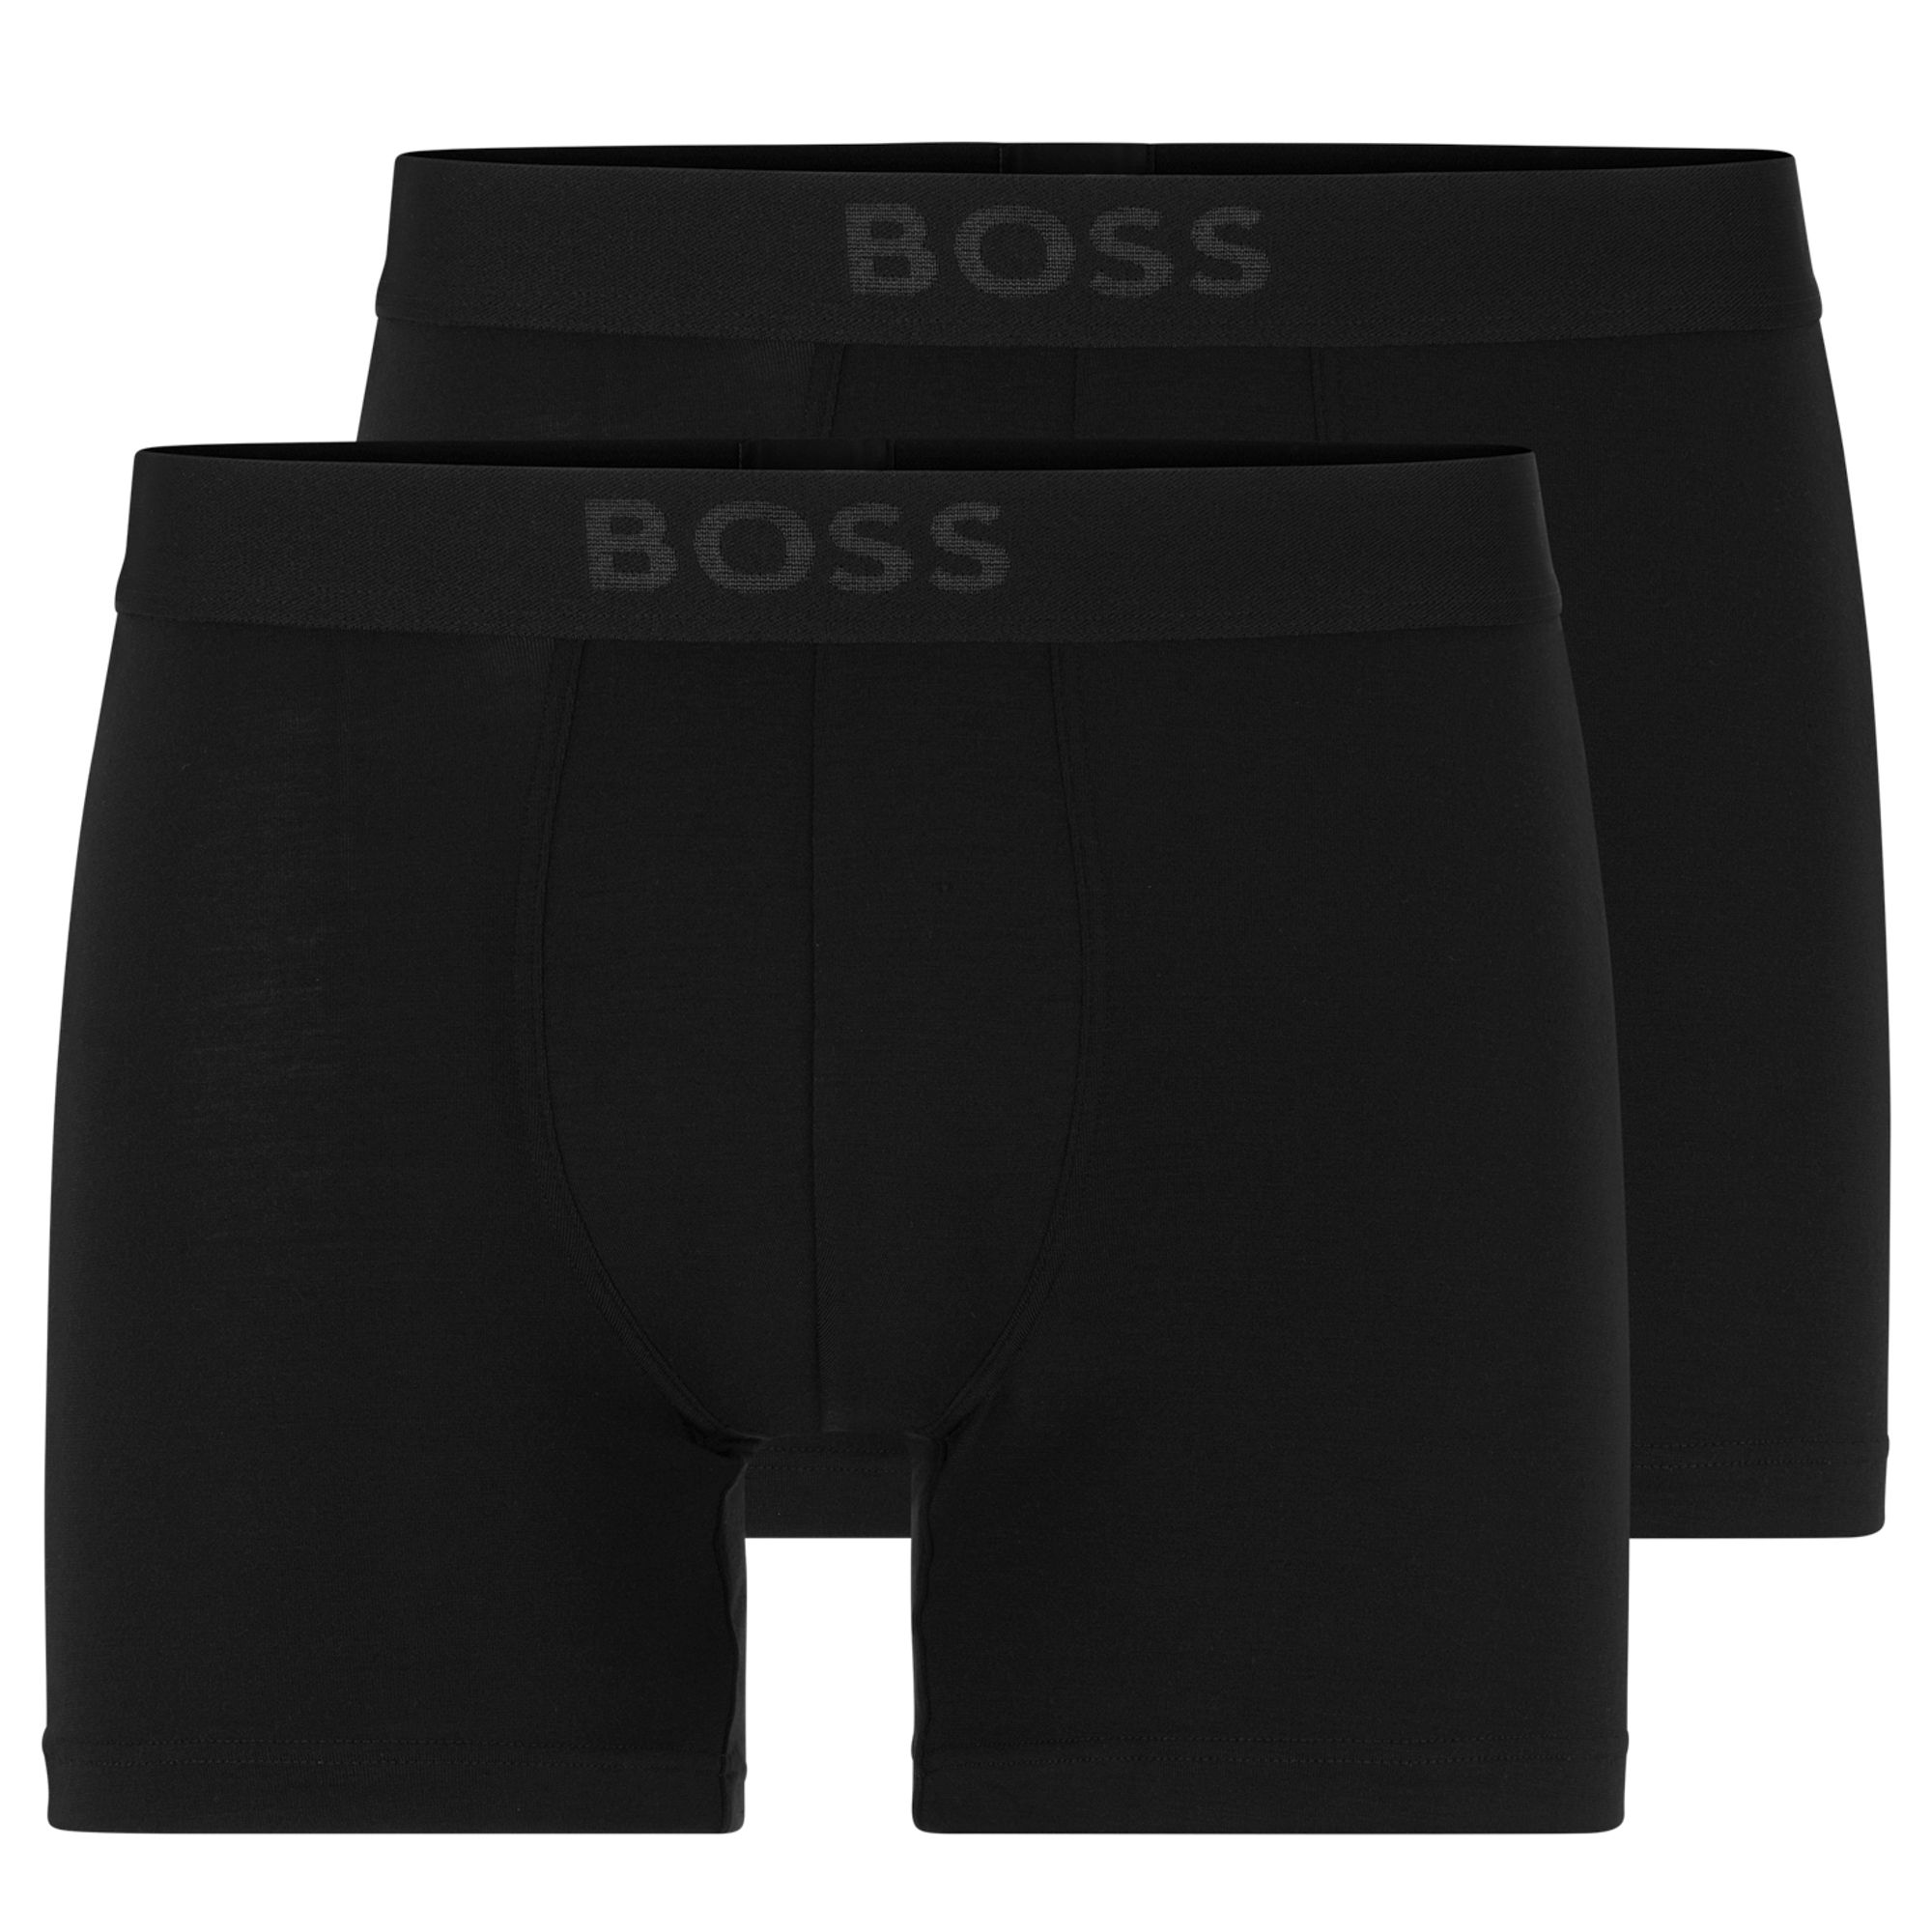 Hugo Boss Menswear Boxershort Zwart 082270-001-L